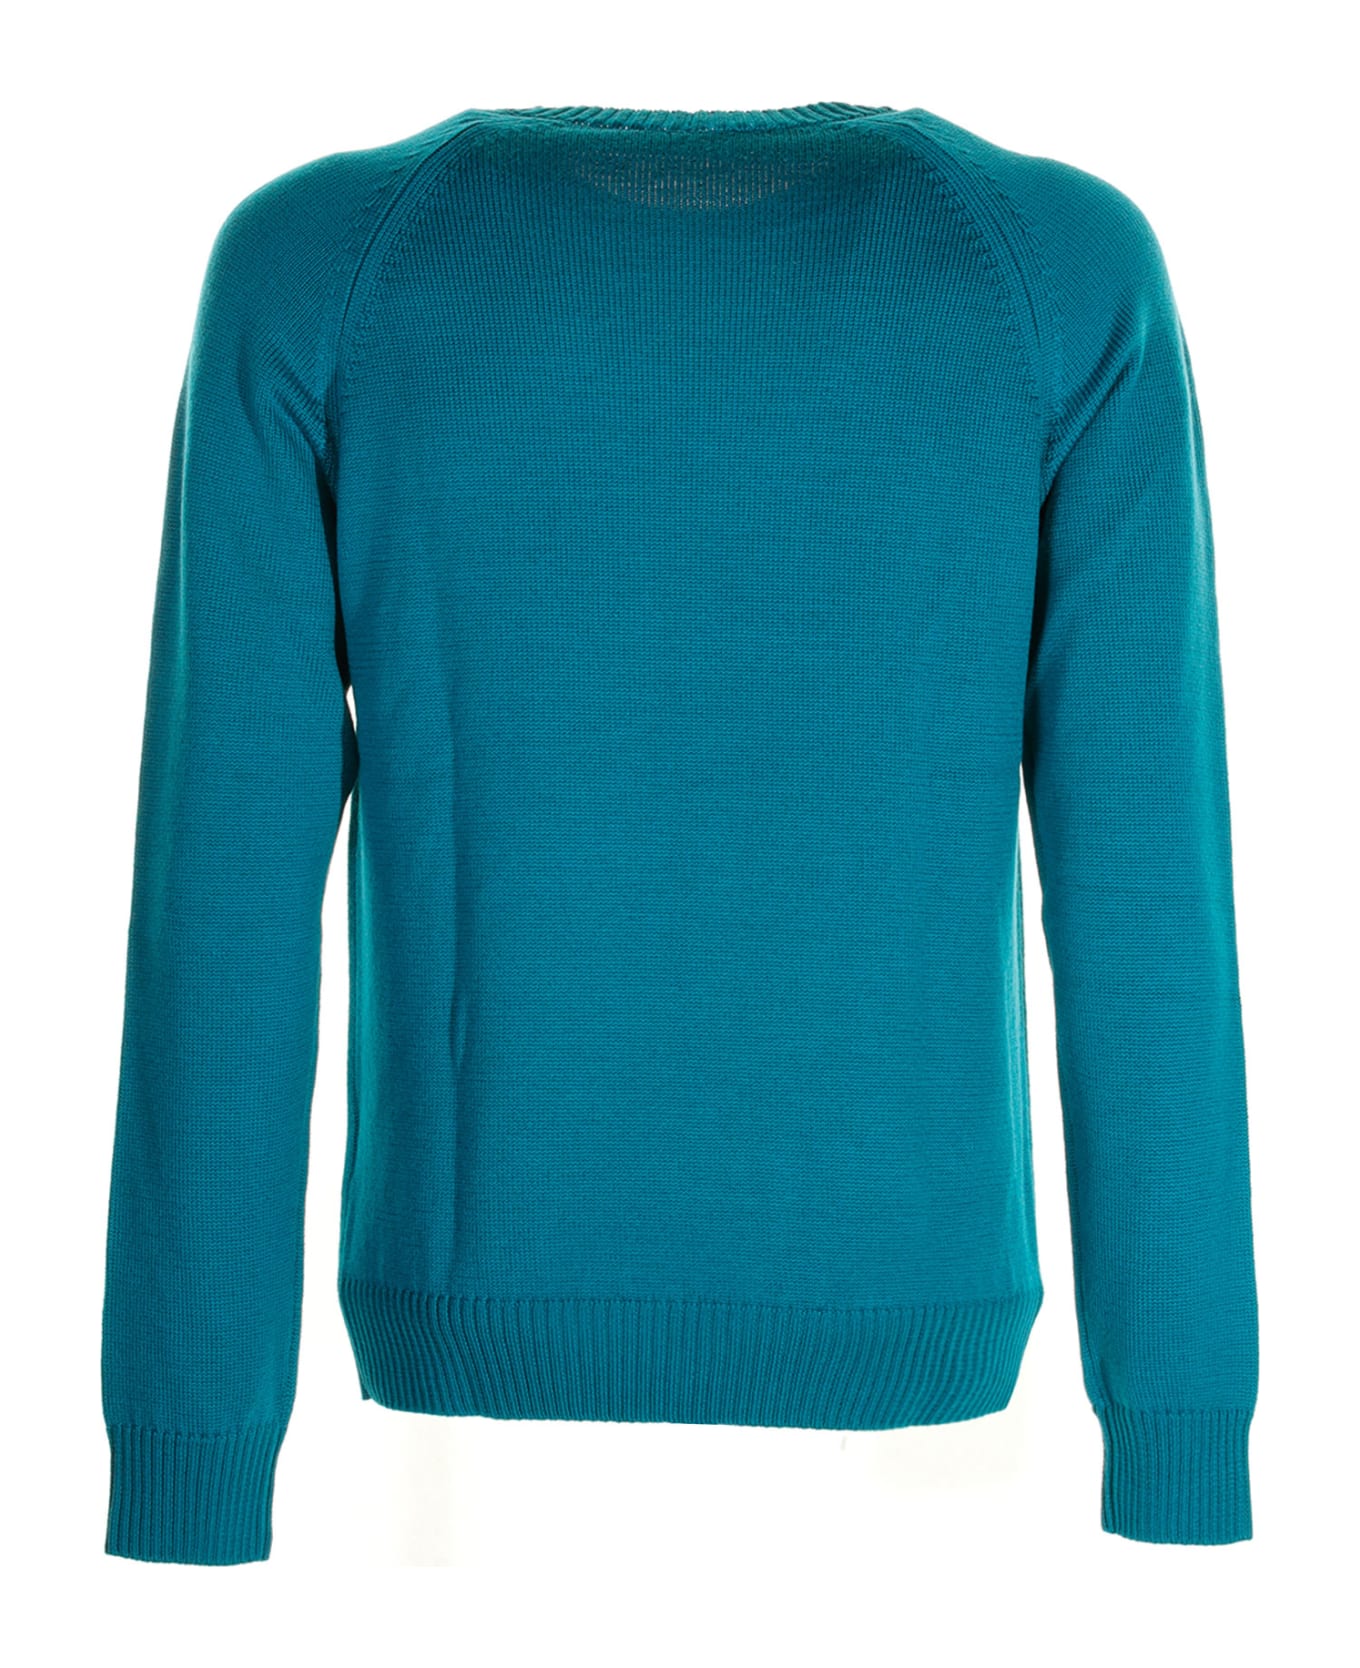 Paolo Pecora Turquoise Crewneck Sweater - PAVONE